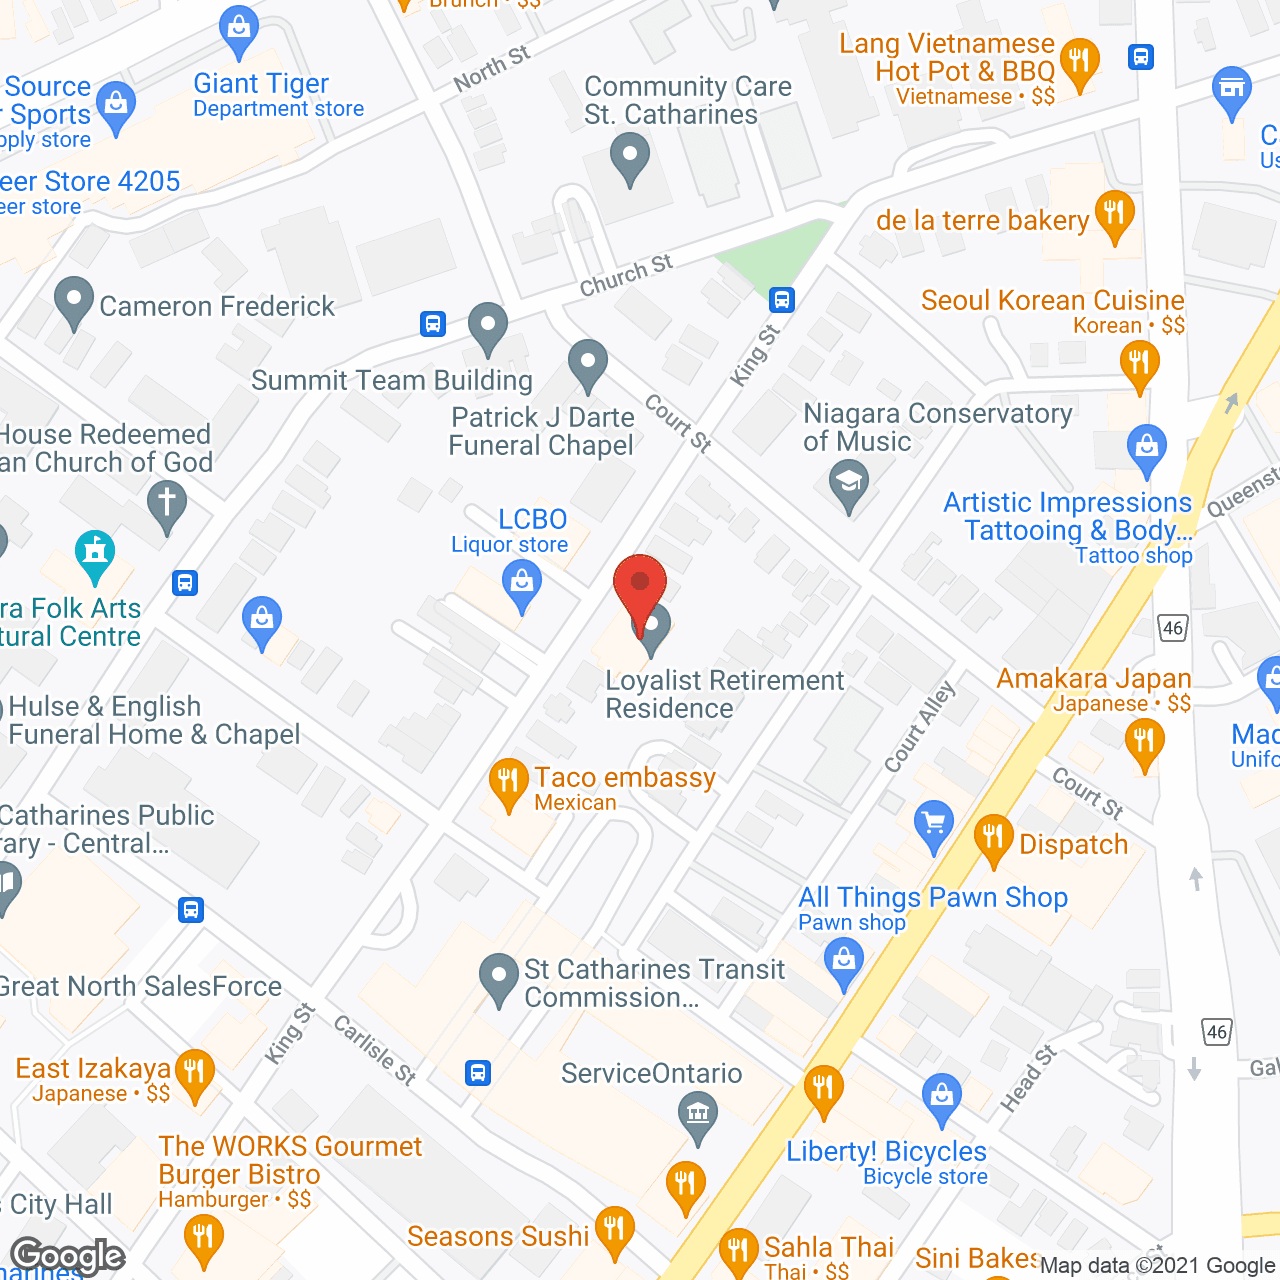 Loyalist Retirement Residence in google map